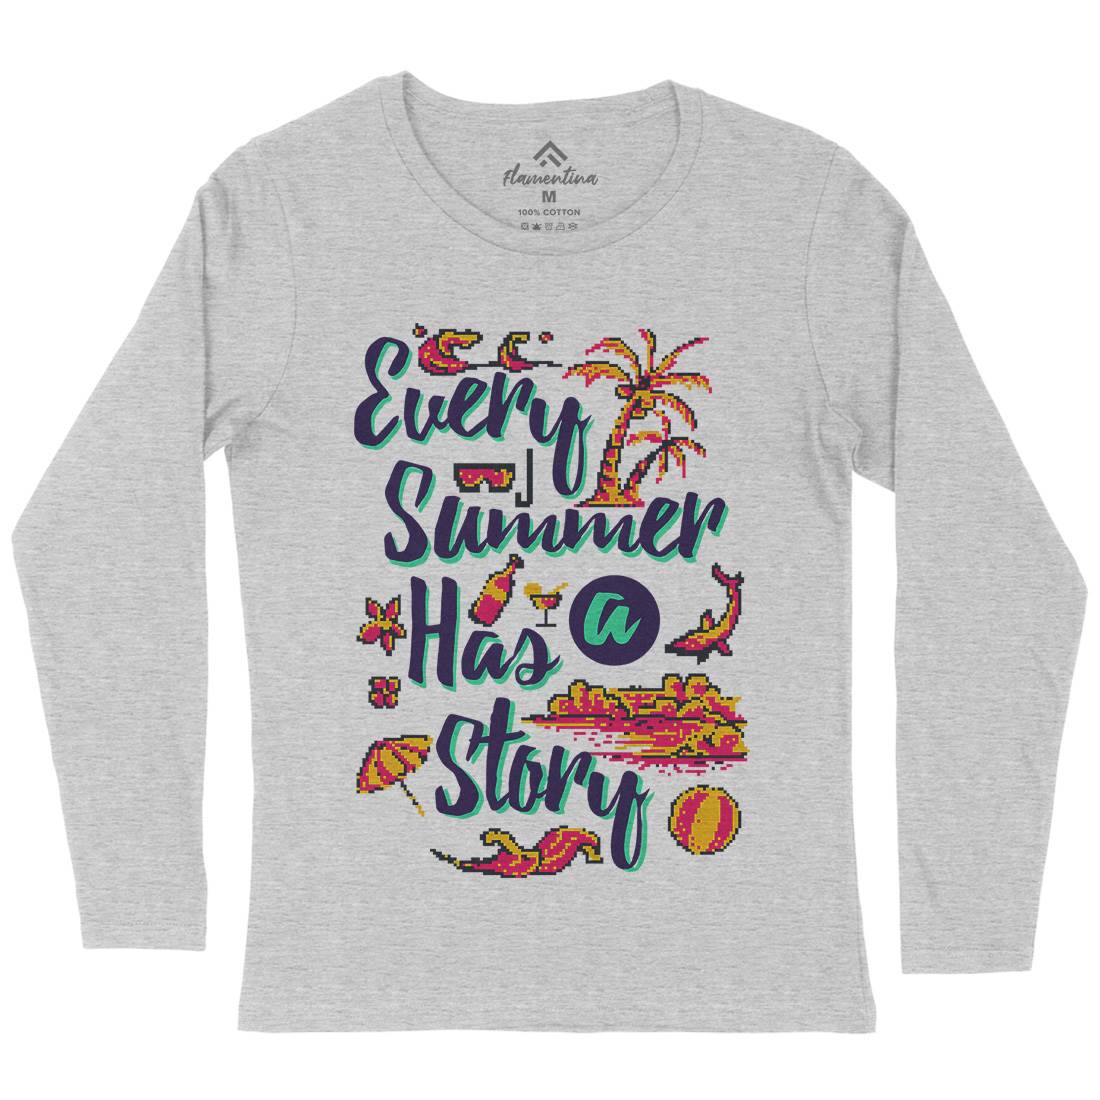 Every Summer Has A Story Womens Long Sleeve T-Shirt Nature B896